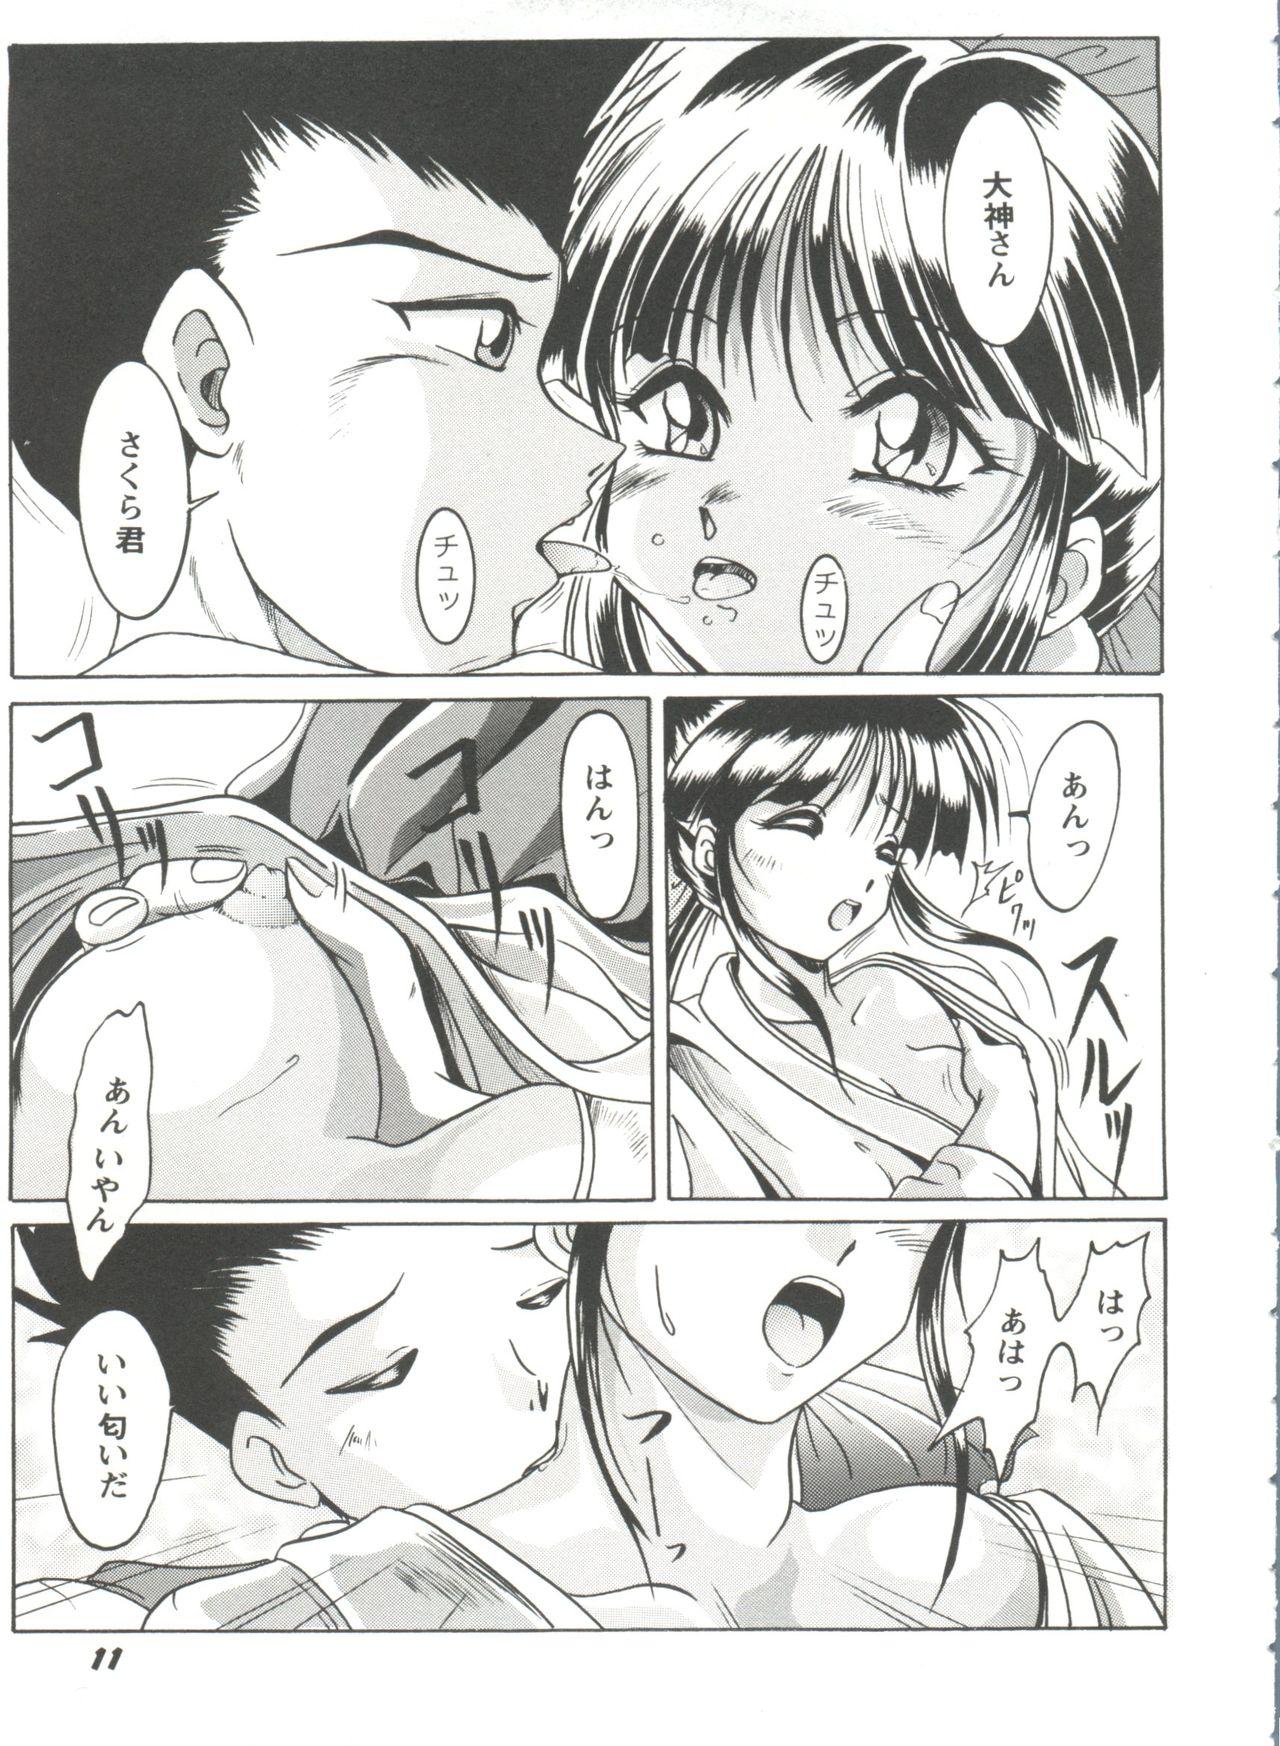 Hard Core Porn Girl's Parade Scene 4 - Sakura taisen Martian successor nadesico Slayers Yu yu hakusho Full - Page 12